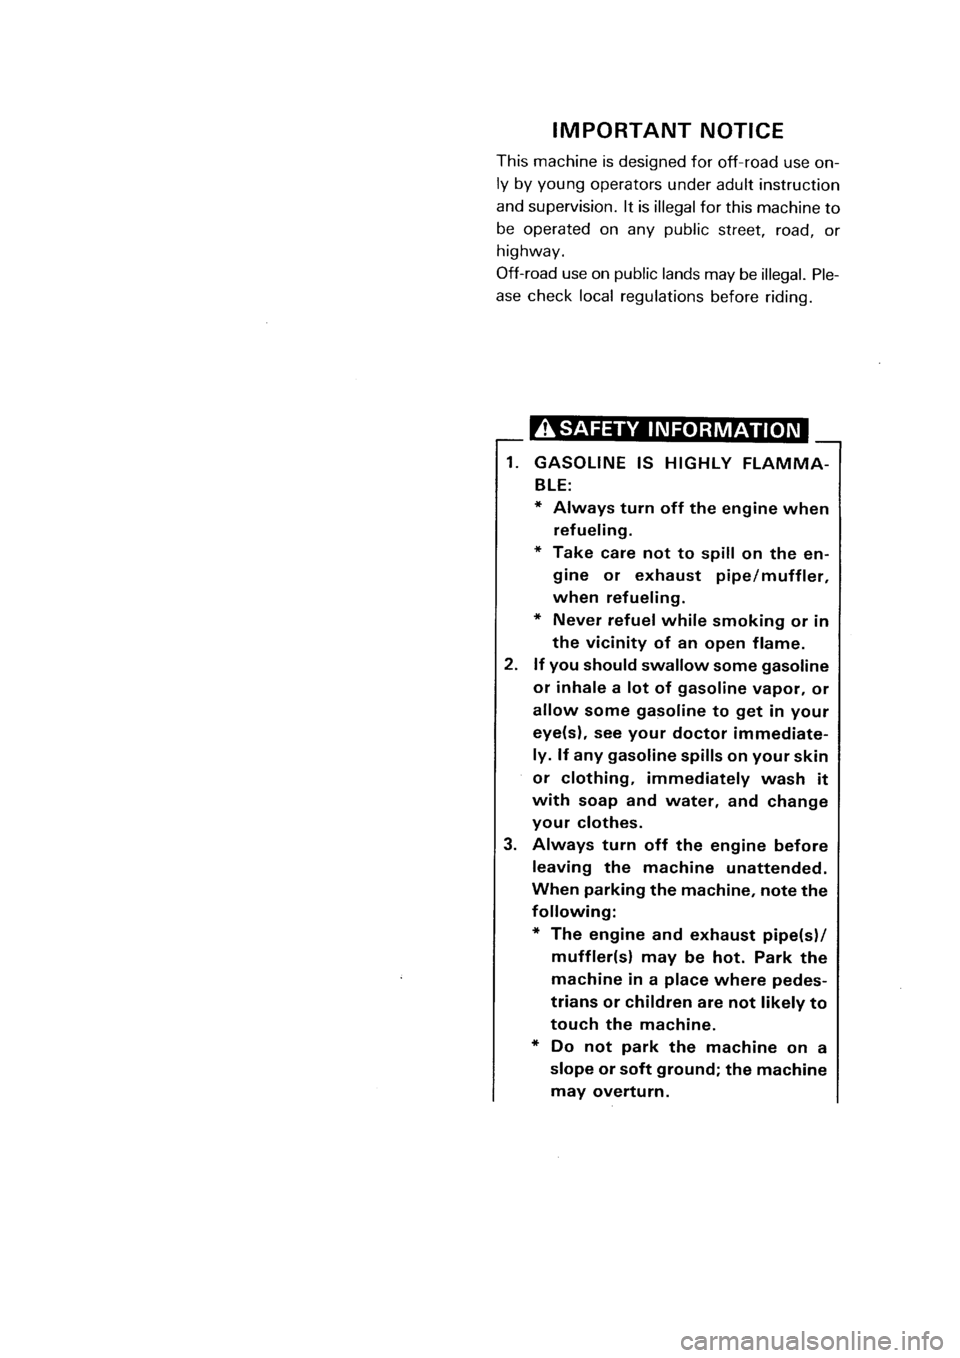 YAMAHA PW80 2001  Owners Manual 